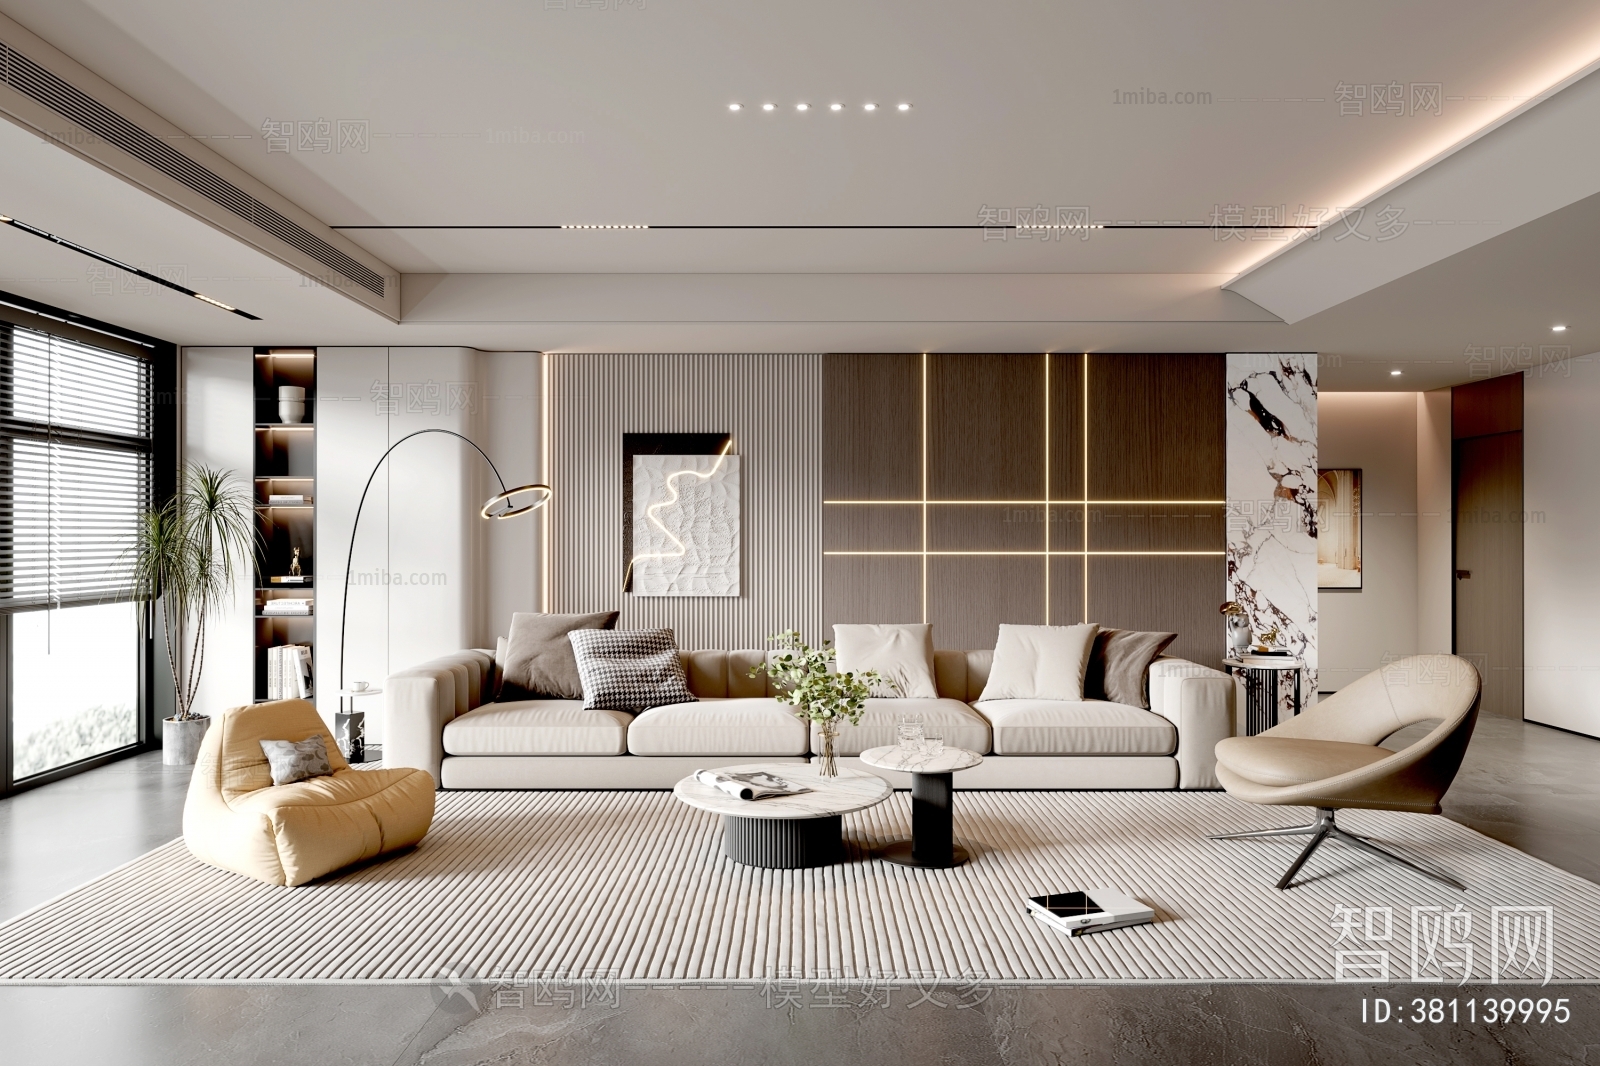 Modern A Living Room sketchup Model Download - Model ID.381139995 | 1miba